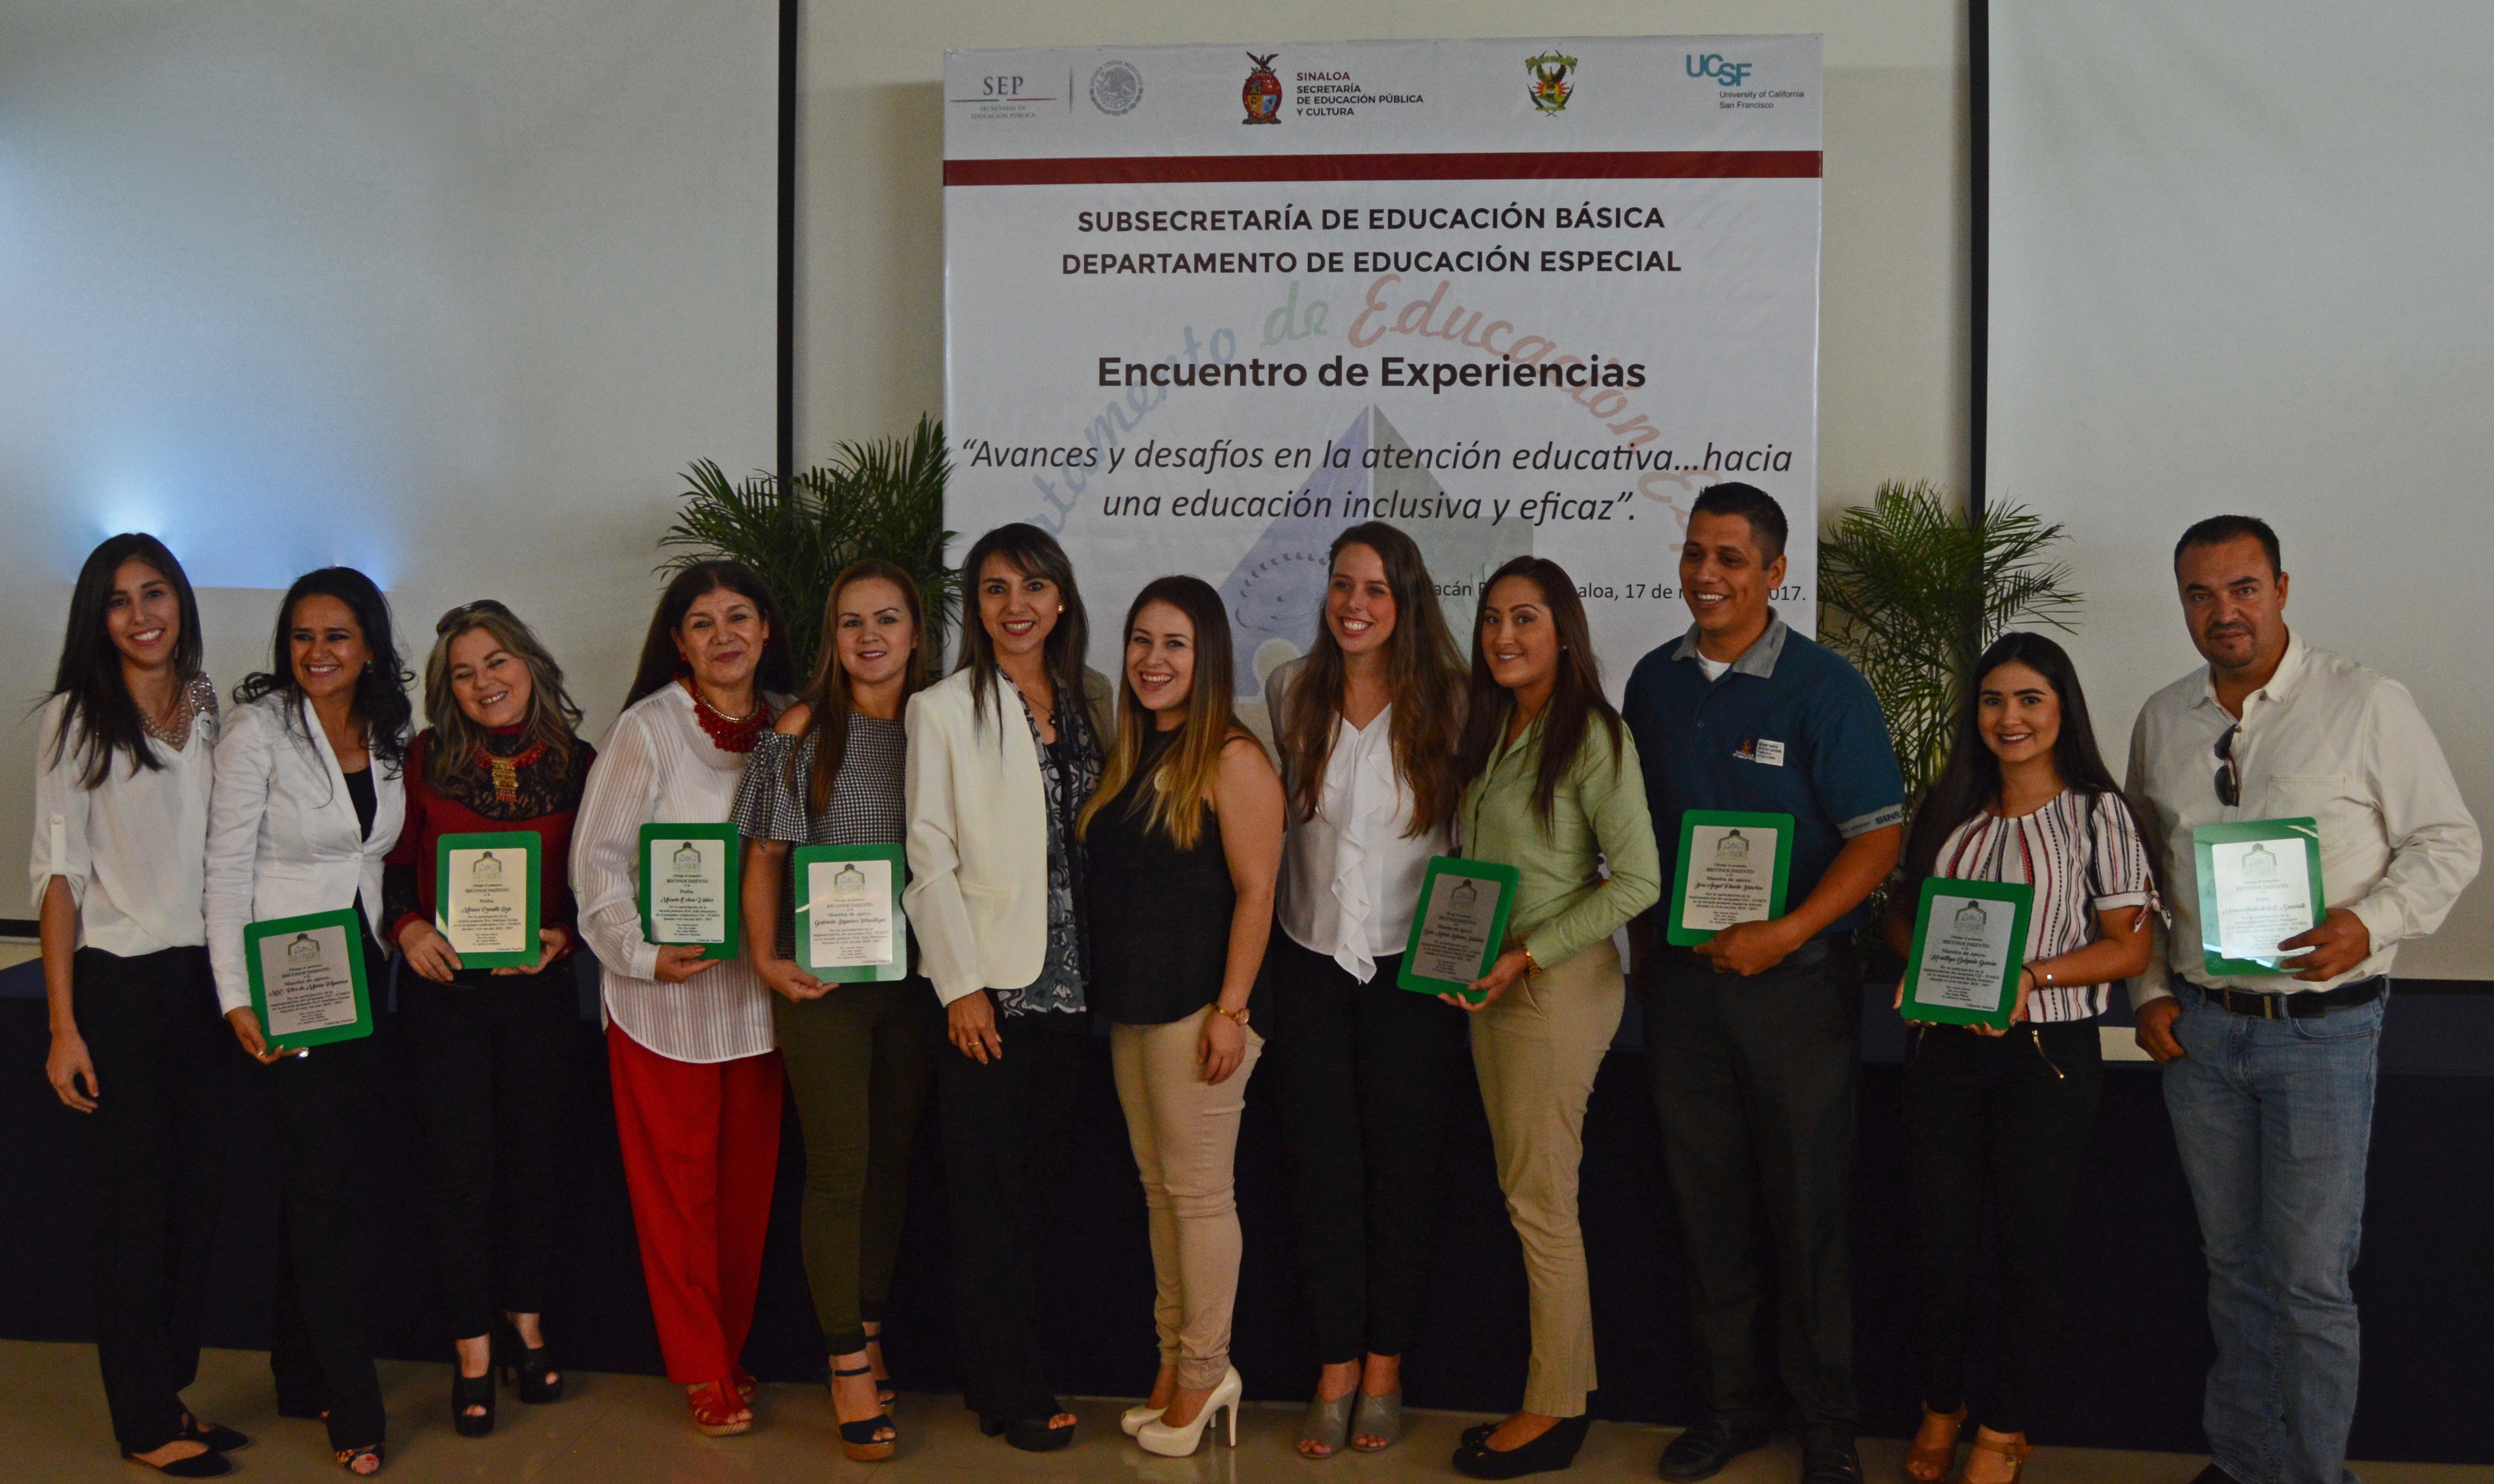 Annual STRIVElab presentation for the SEP in Sinaloa